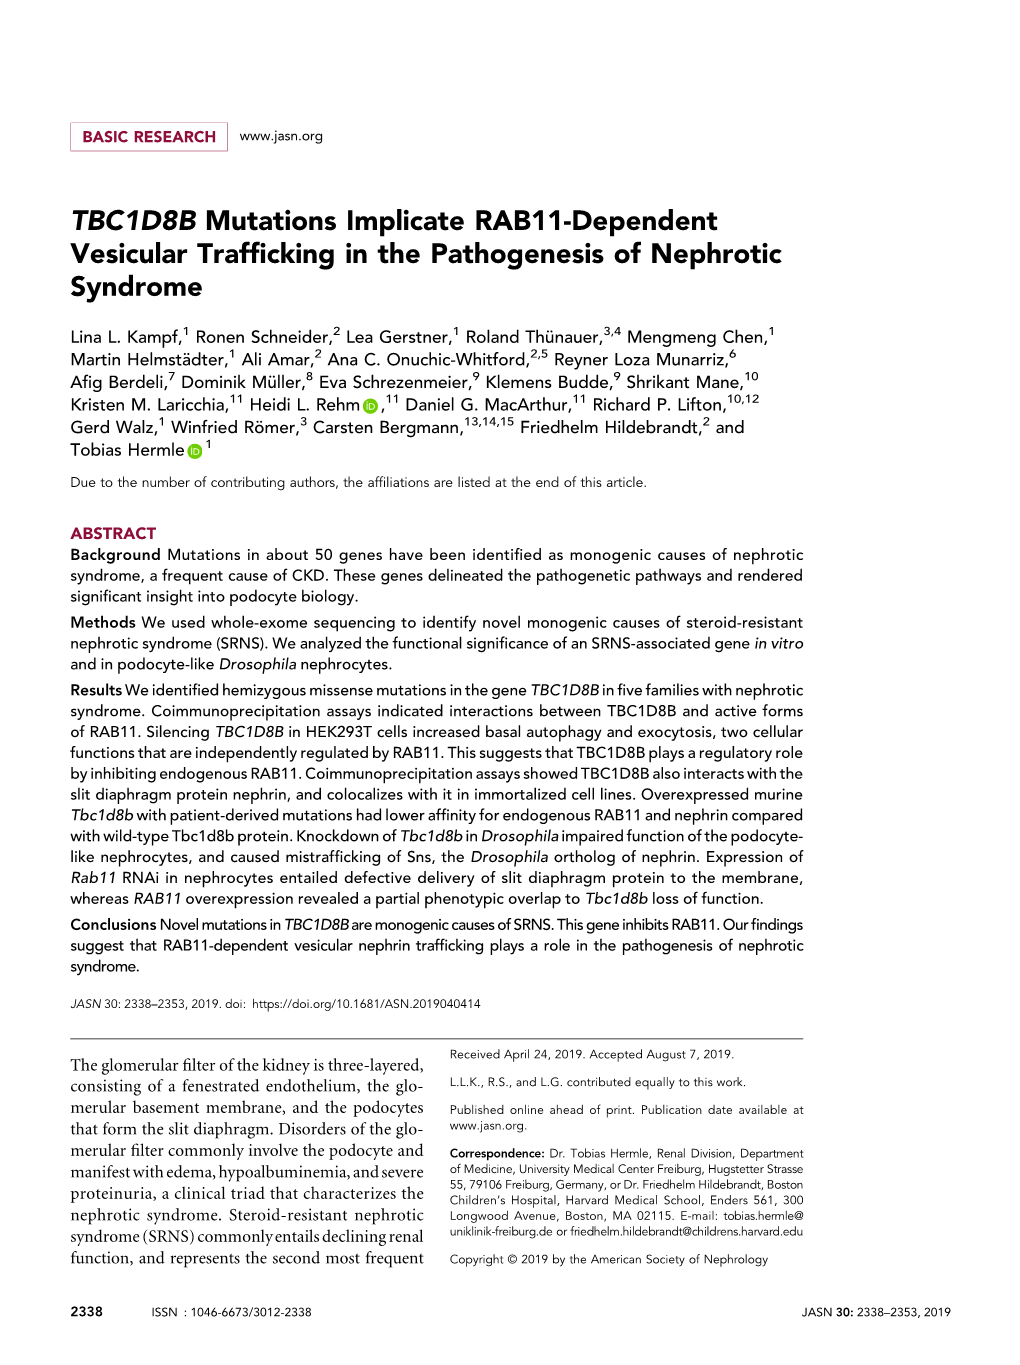 TBC1D8B Mutations Implicate RAB11-Dependent Vesicular Trafﬁcking in the Pathogenesis of Nephrotic Syndrome